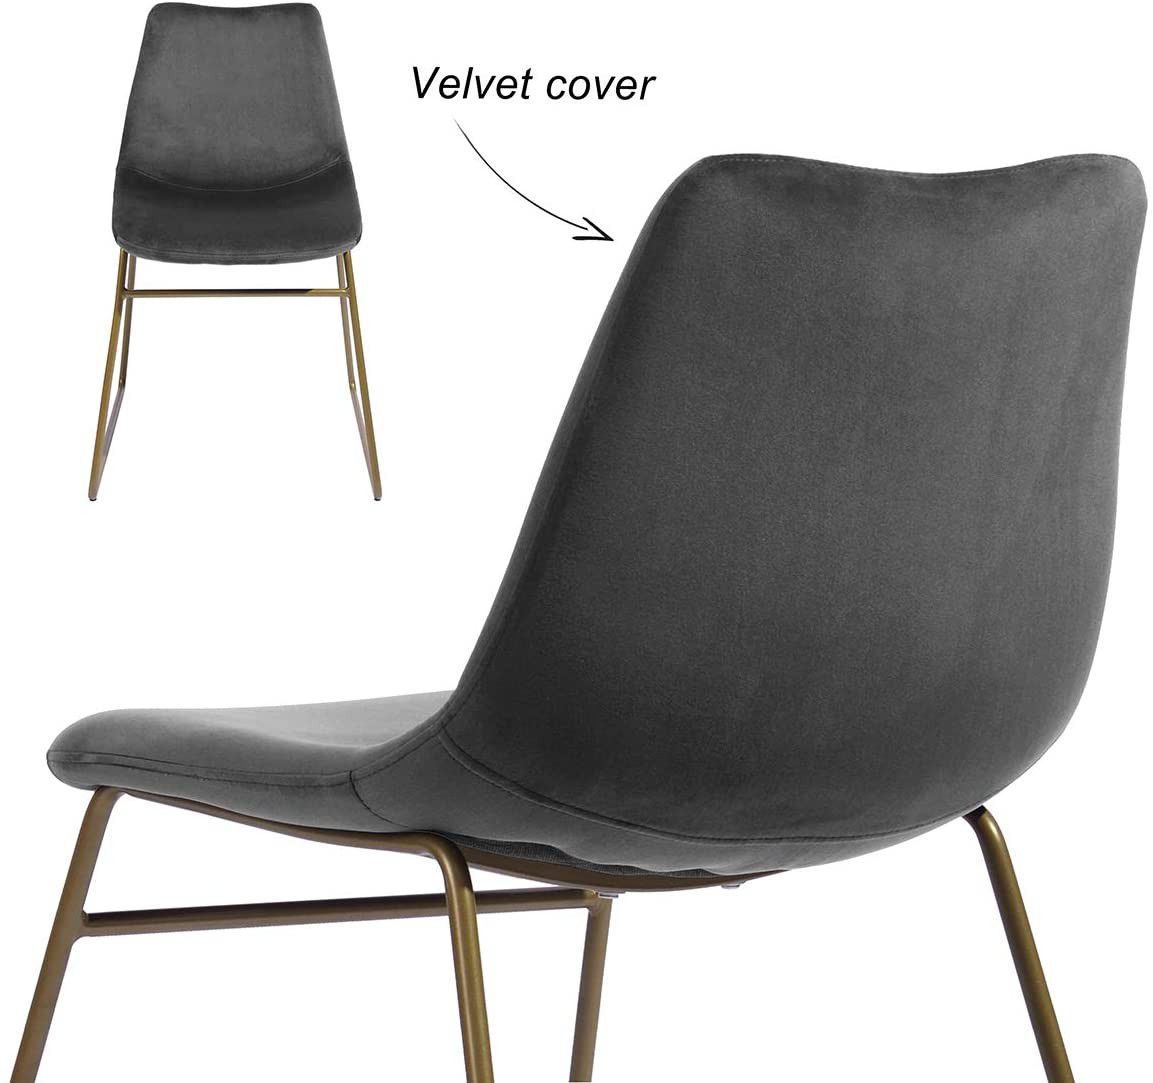 Set of 2 Elegant Velvet Chairs with Gold Metal Legs